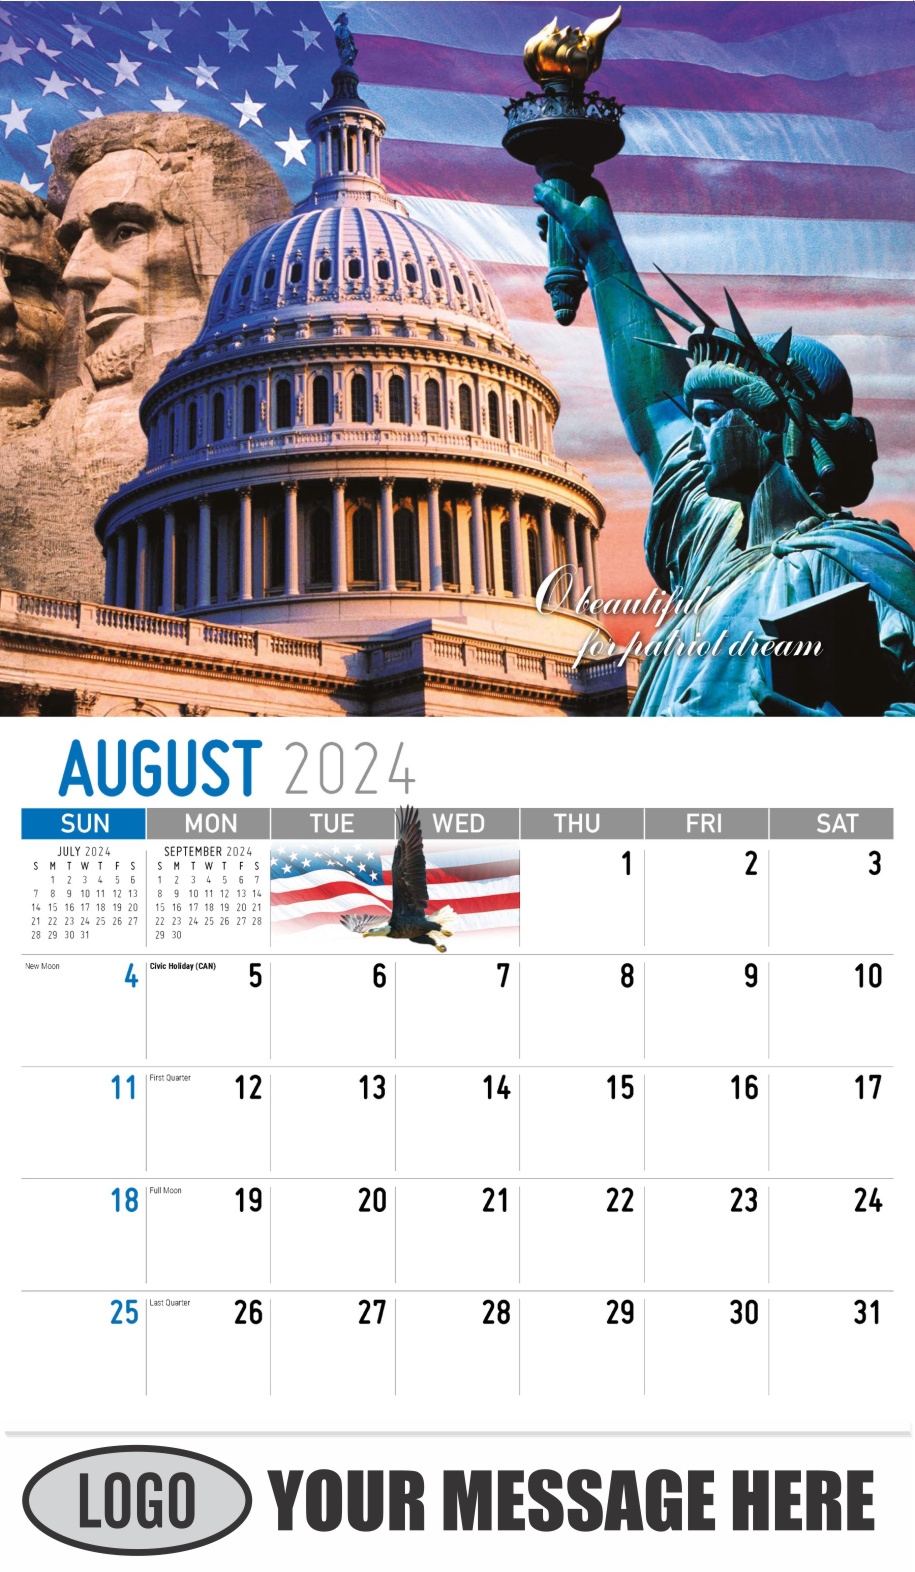 America the Beautiful  2024 Business Advertising Wall Calendar - August